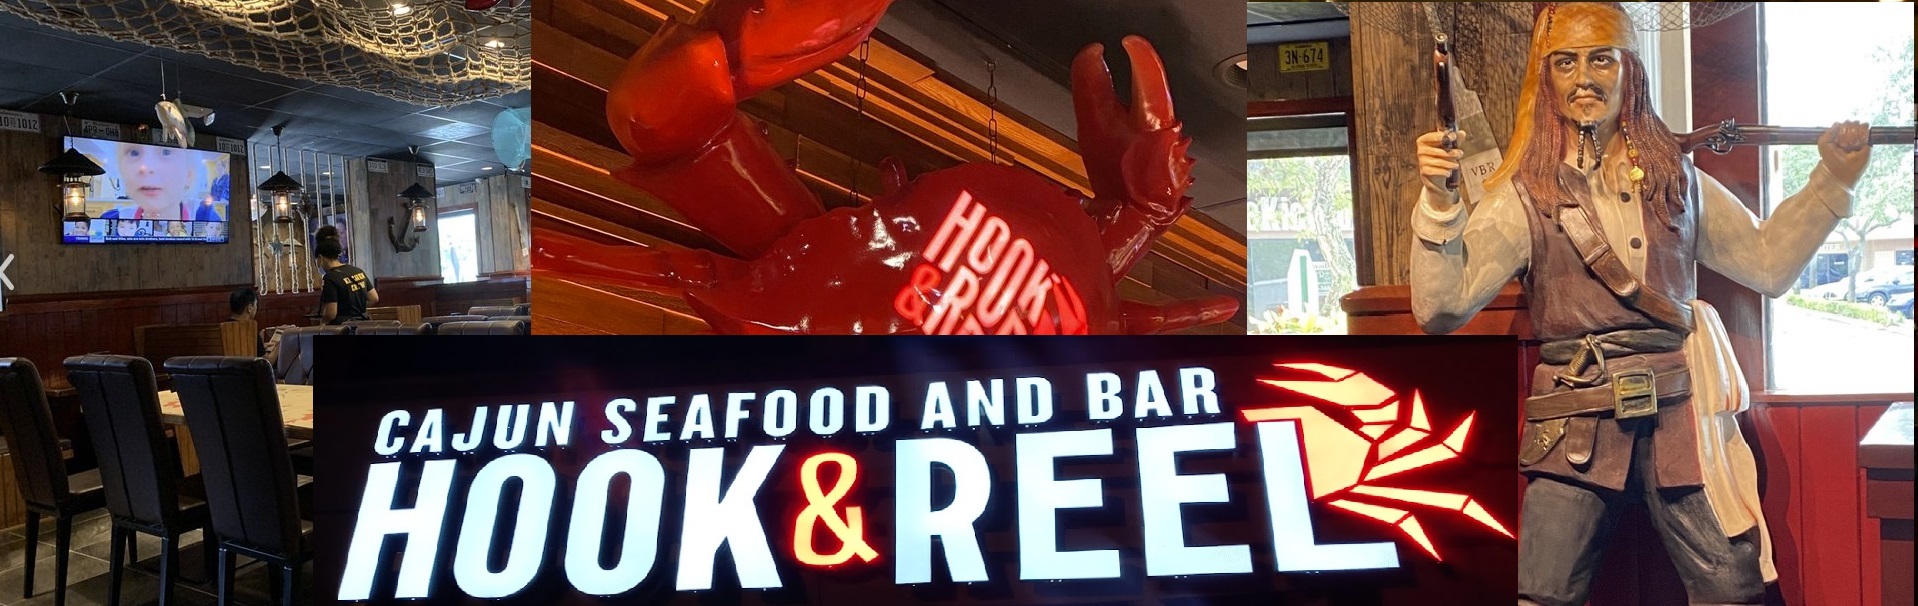 Hook & Reel Cajun Seafood &Bar by Hook & Reel Cajun Seafood &Bar